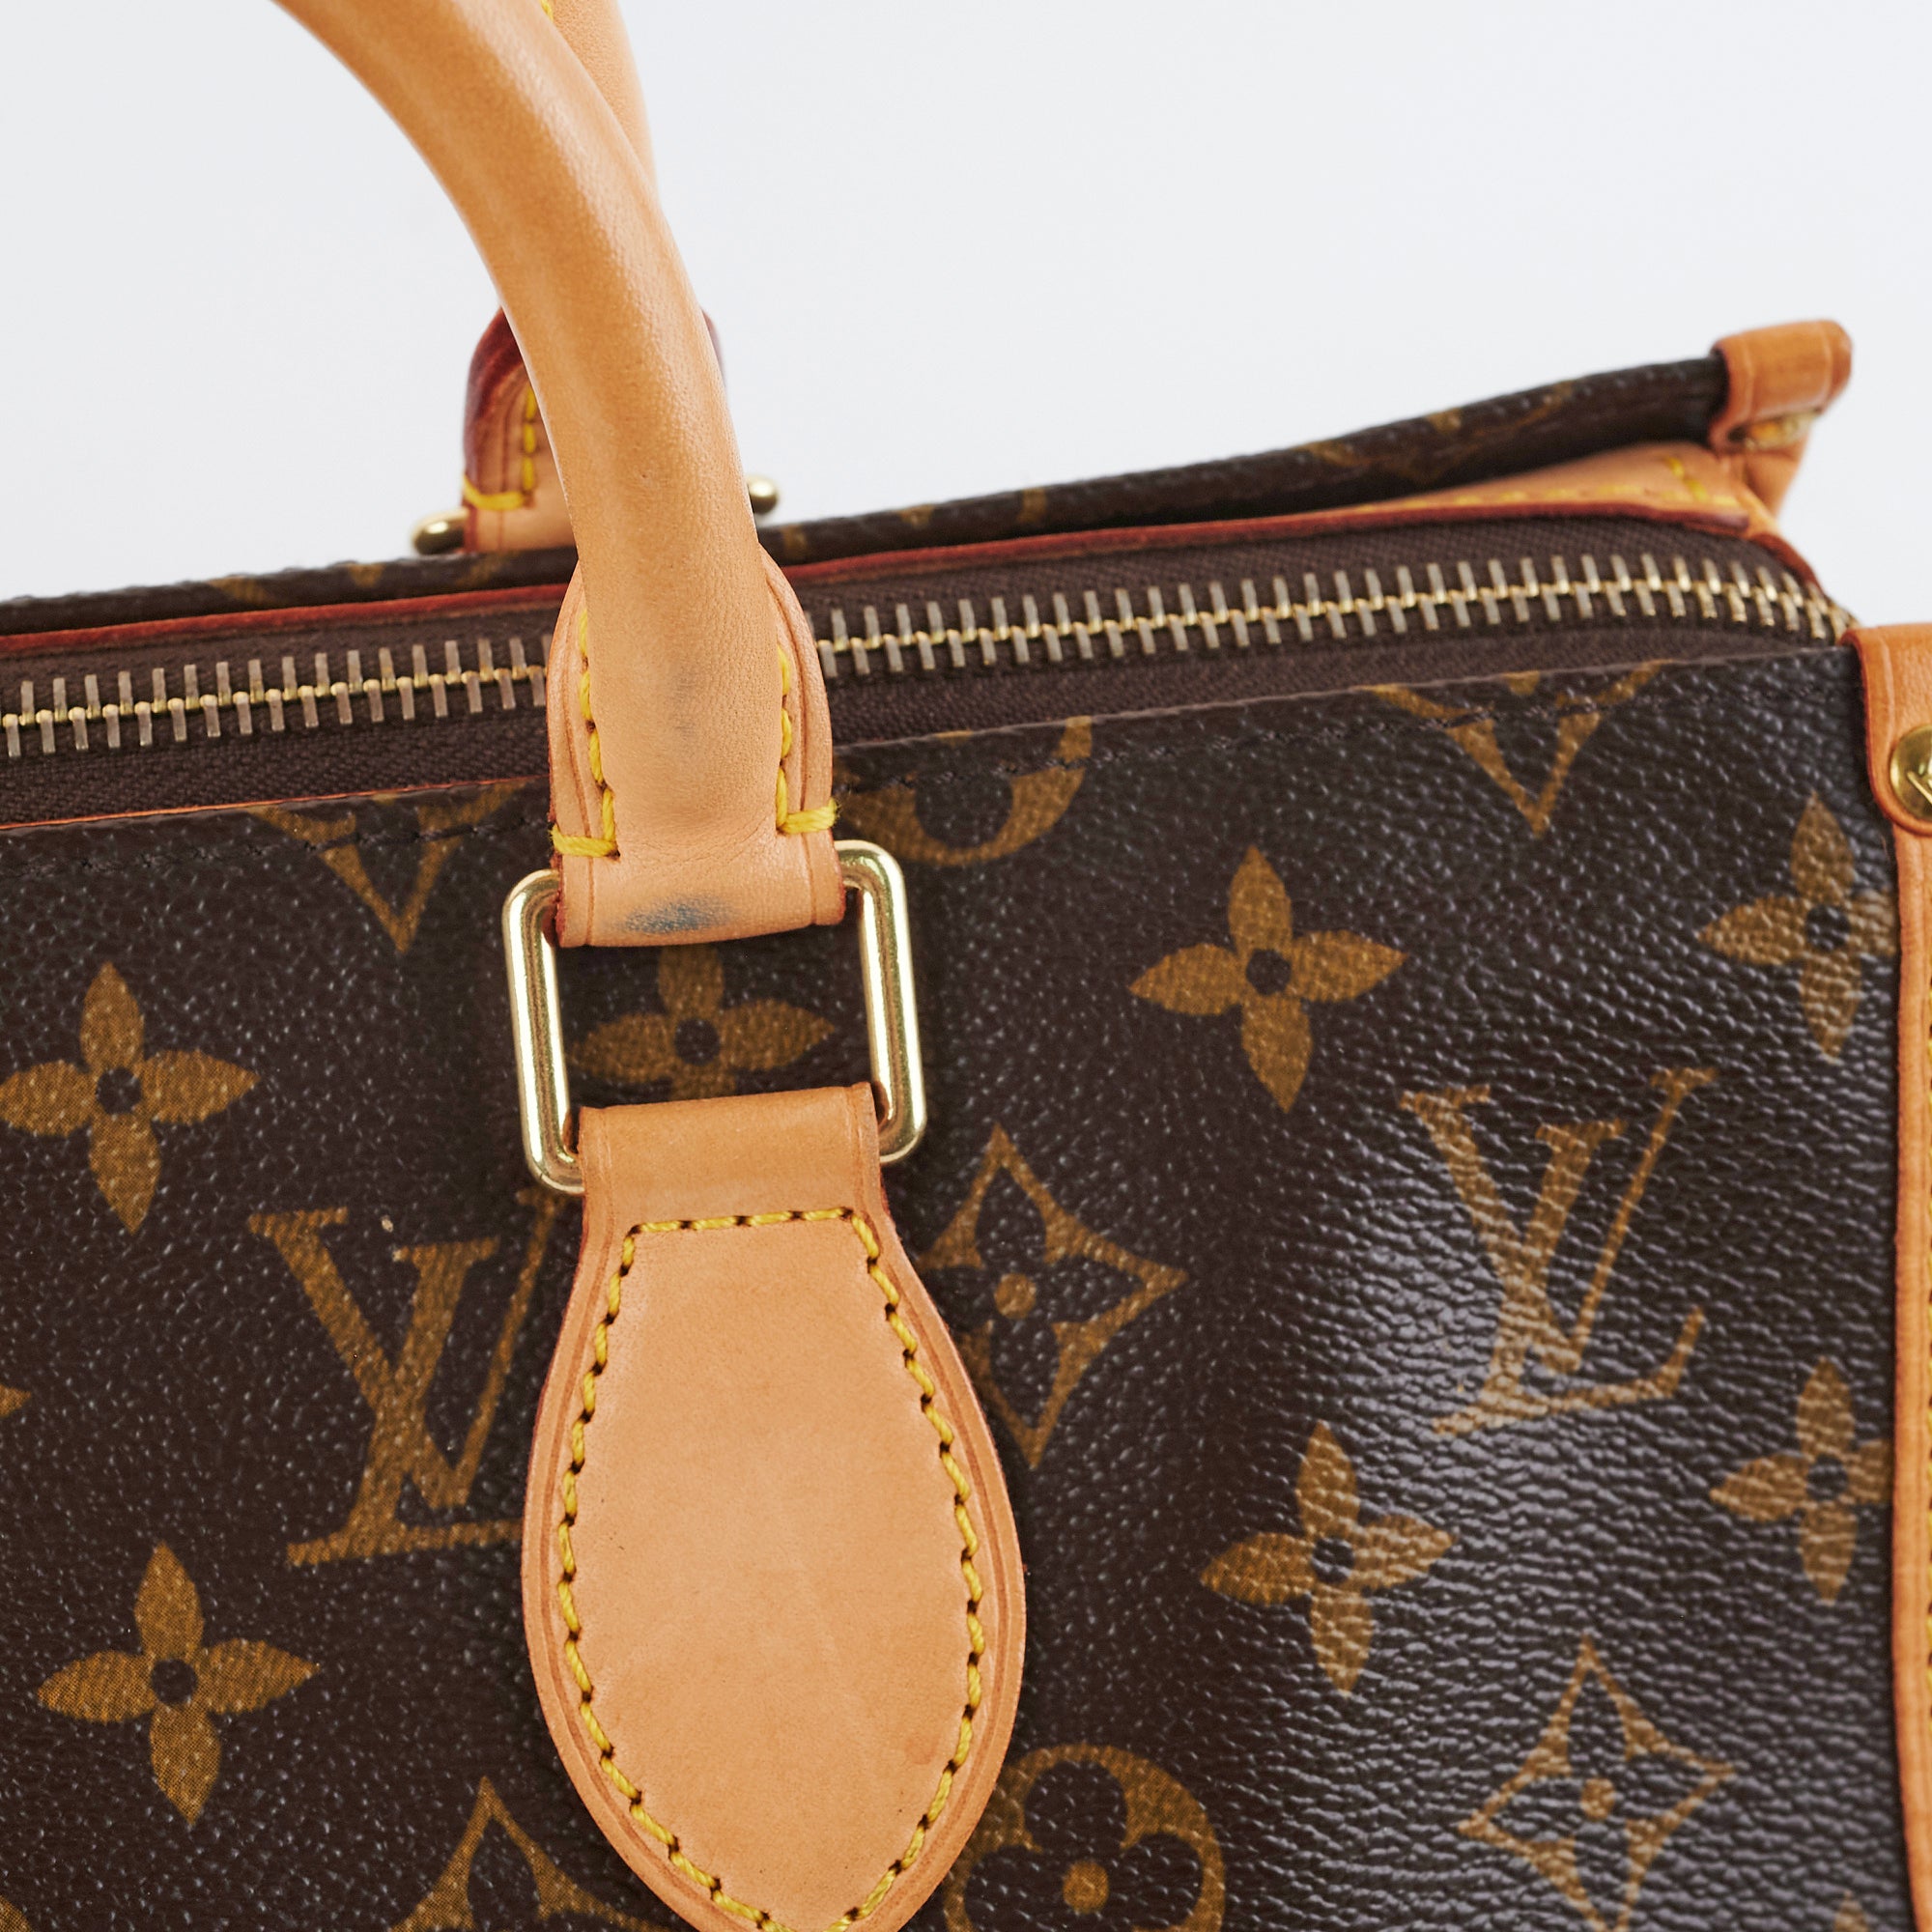 Louis Vuitton Popincourt Rectangular Monogram Bag - THE PURSE AFFAIR